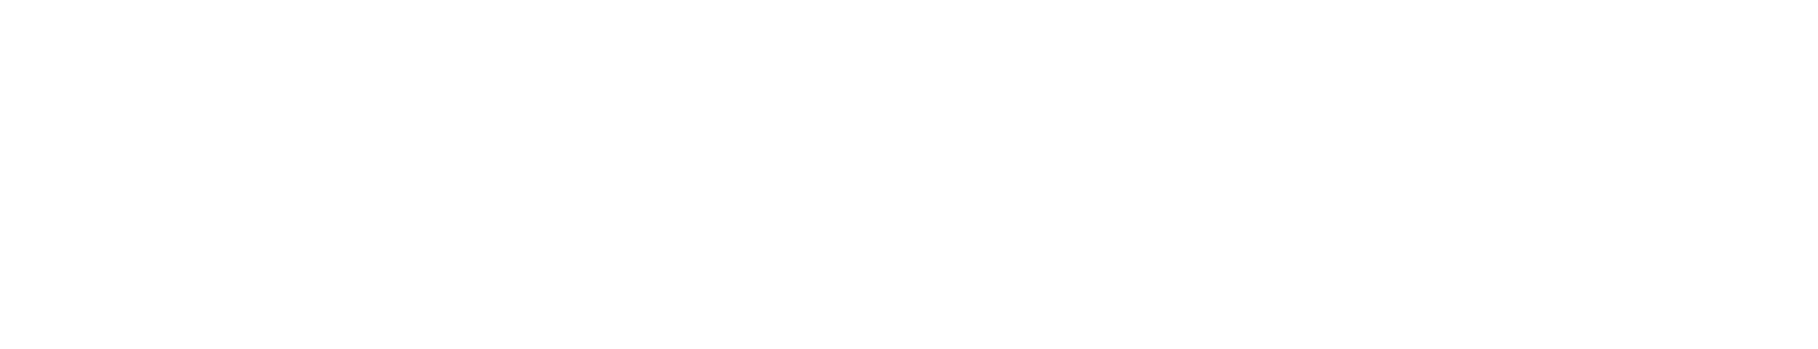 Affiverse Media Logo